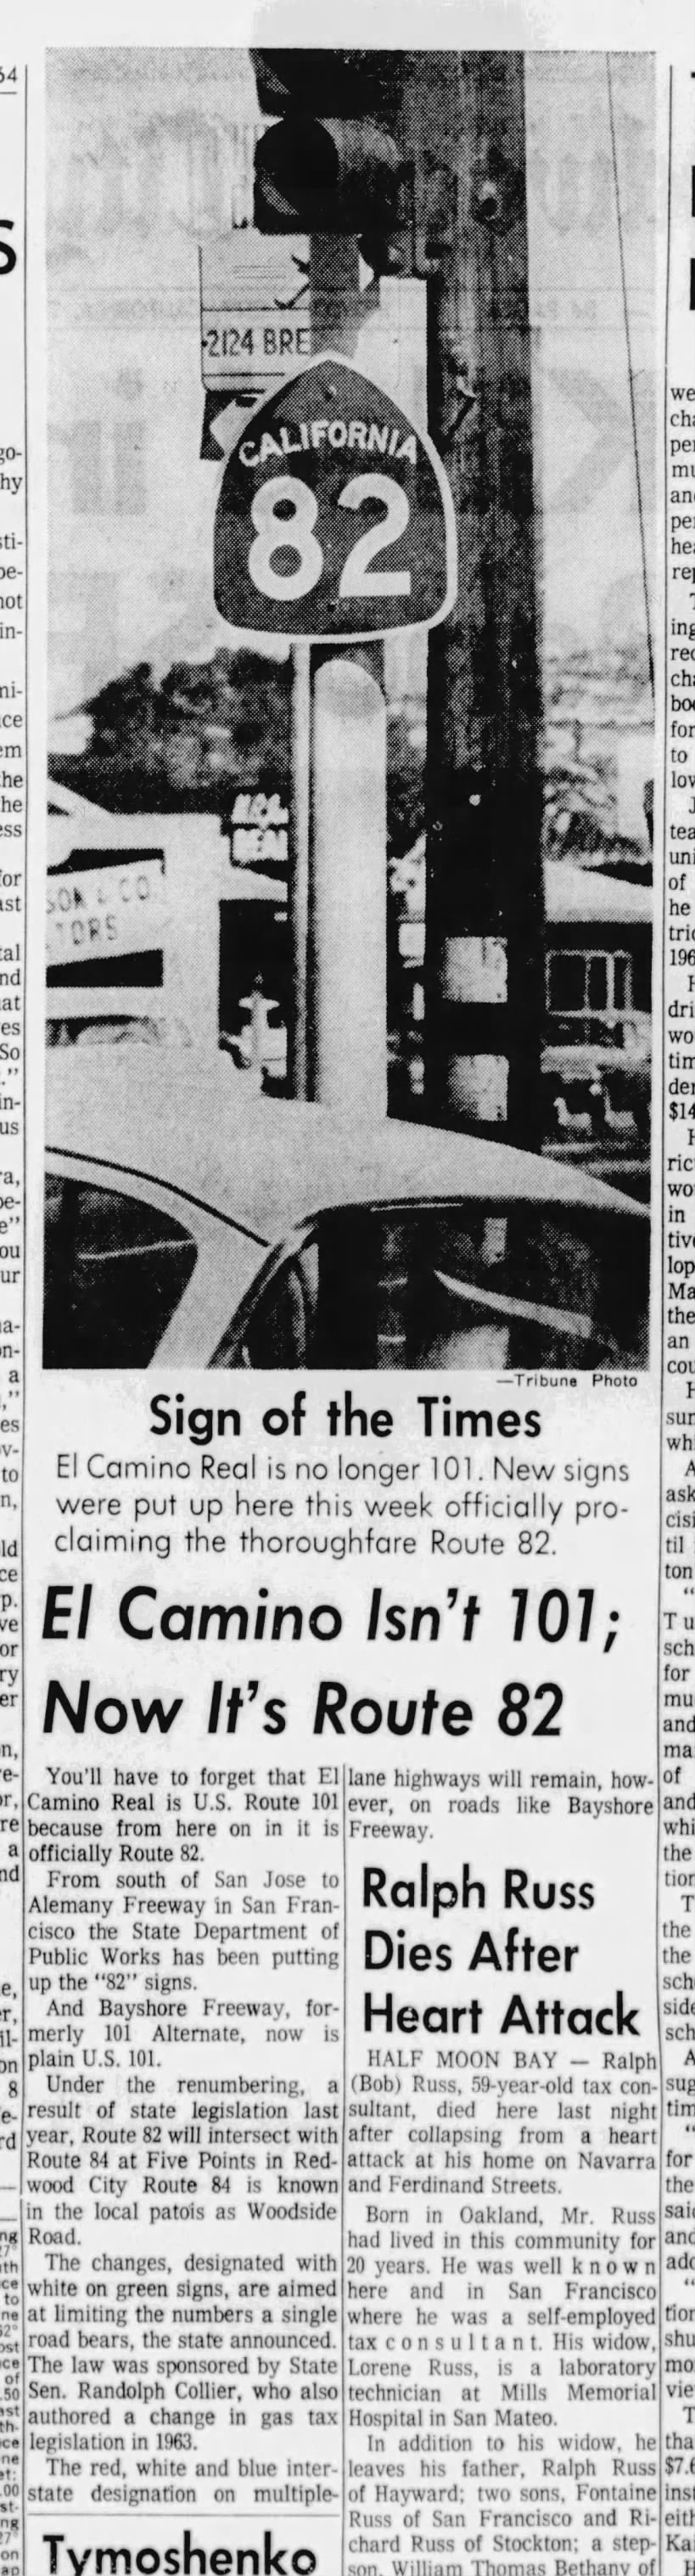 El Camino Isn't 101; Now It's Route 82